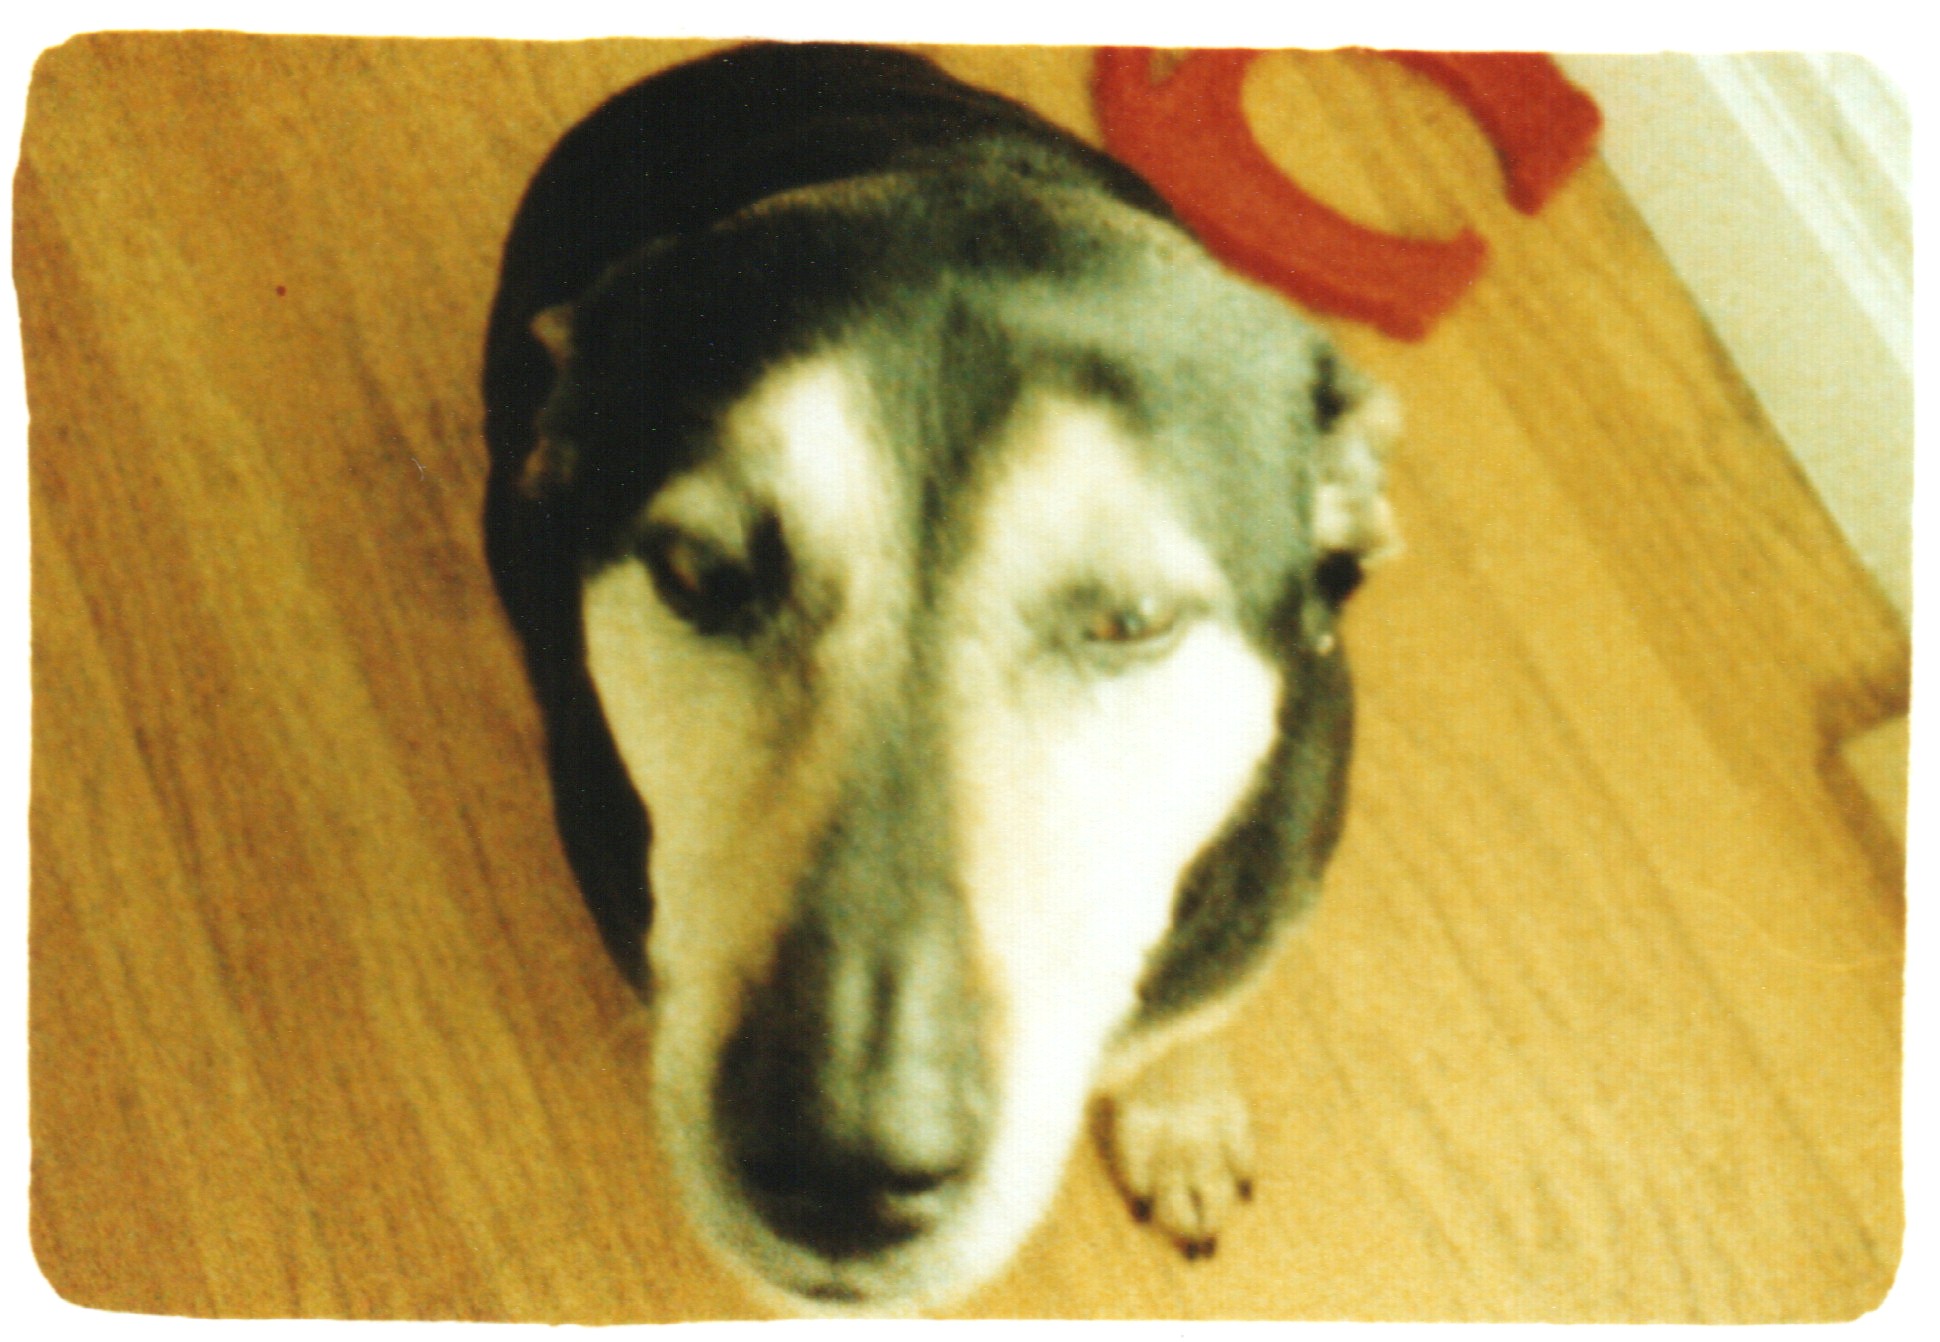 EM-50 scan of my old dog Bo